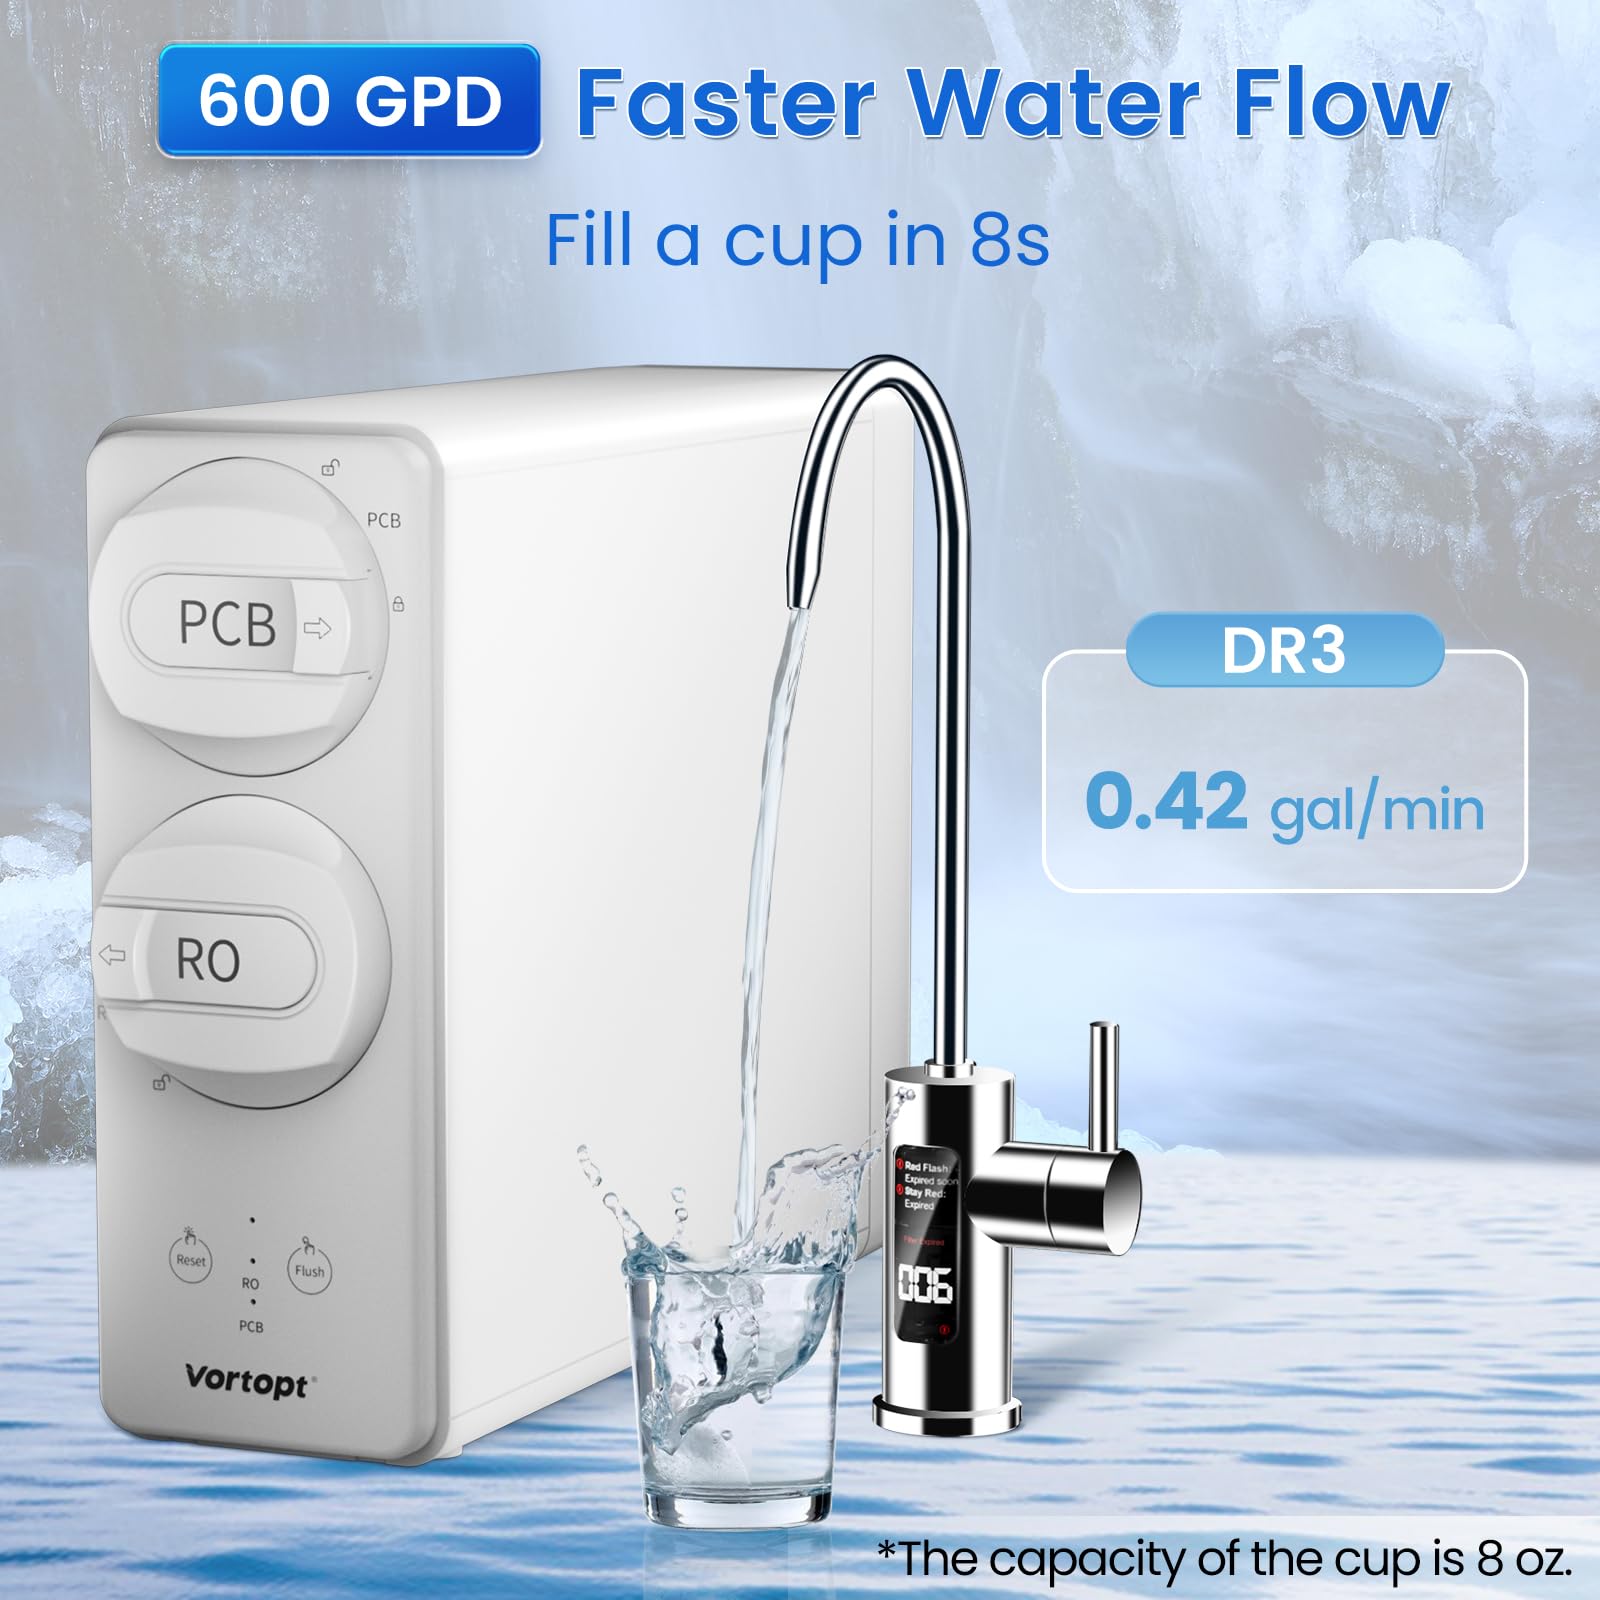  DR3-Vortopt Reverse Osmosis System - 600 GPD Under Sink RO Water Filter 